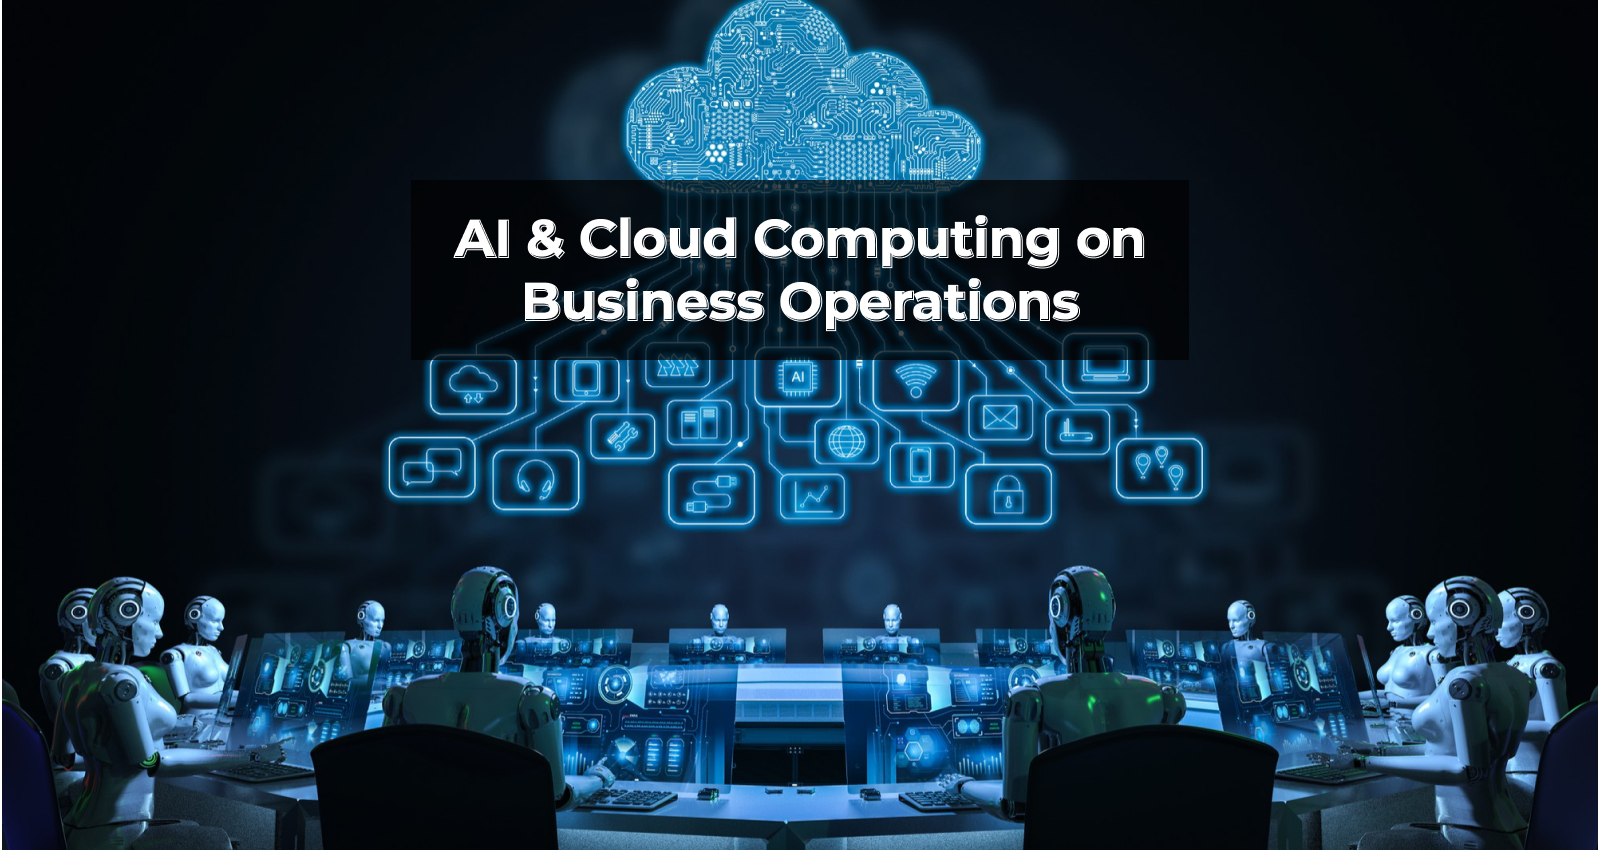 AI, Artificial Intelligence, Cloud Computing, AI & Cloud Computing on Business Operations, Business Transformation, Business Operations